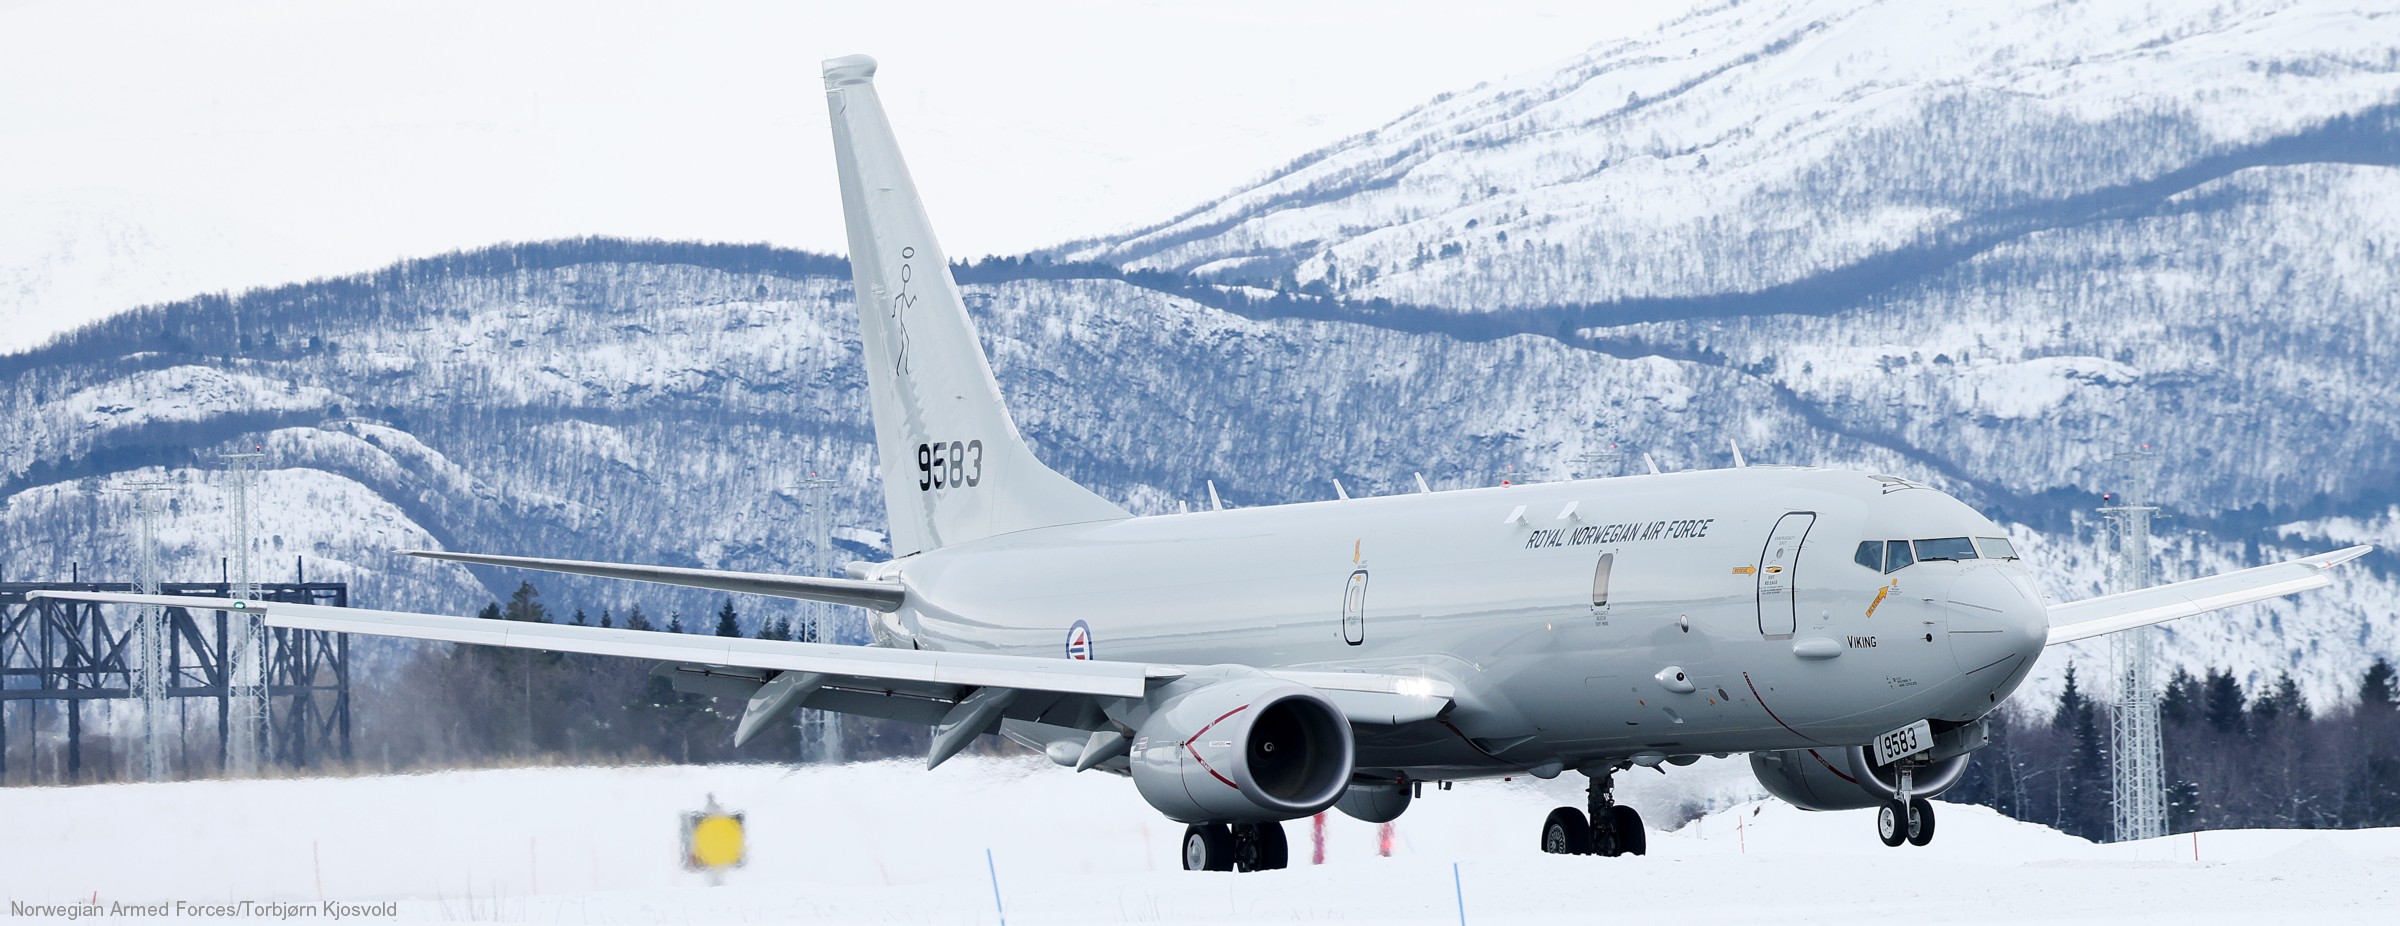 p-8a poseidon maritime patrol aircraft royal norwegian air force luftforsvaret 9583 viking 18